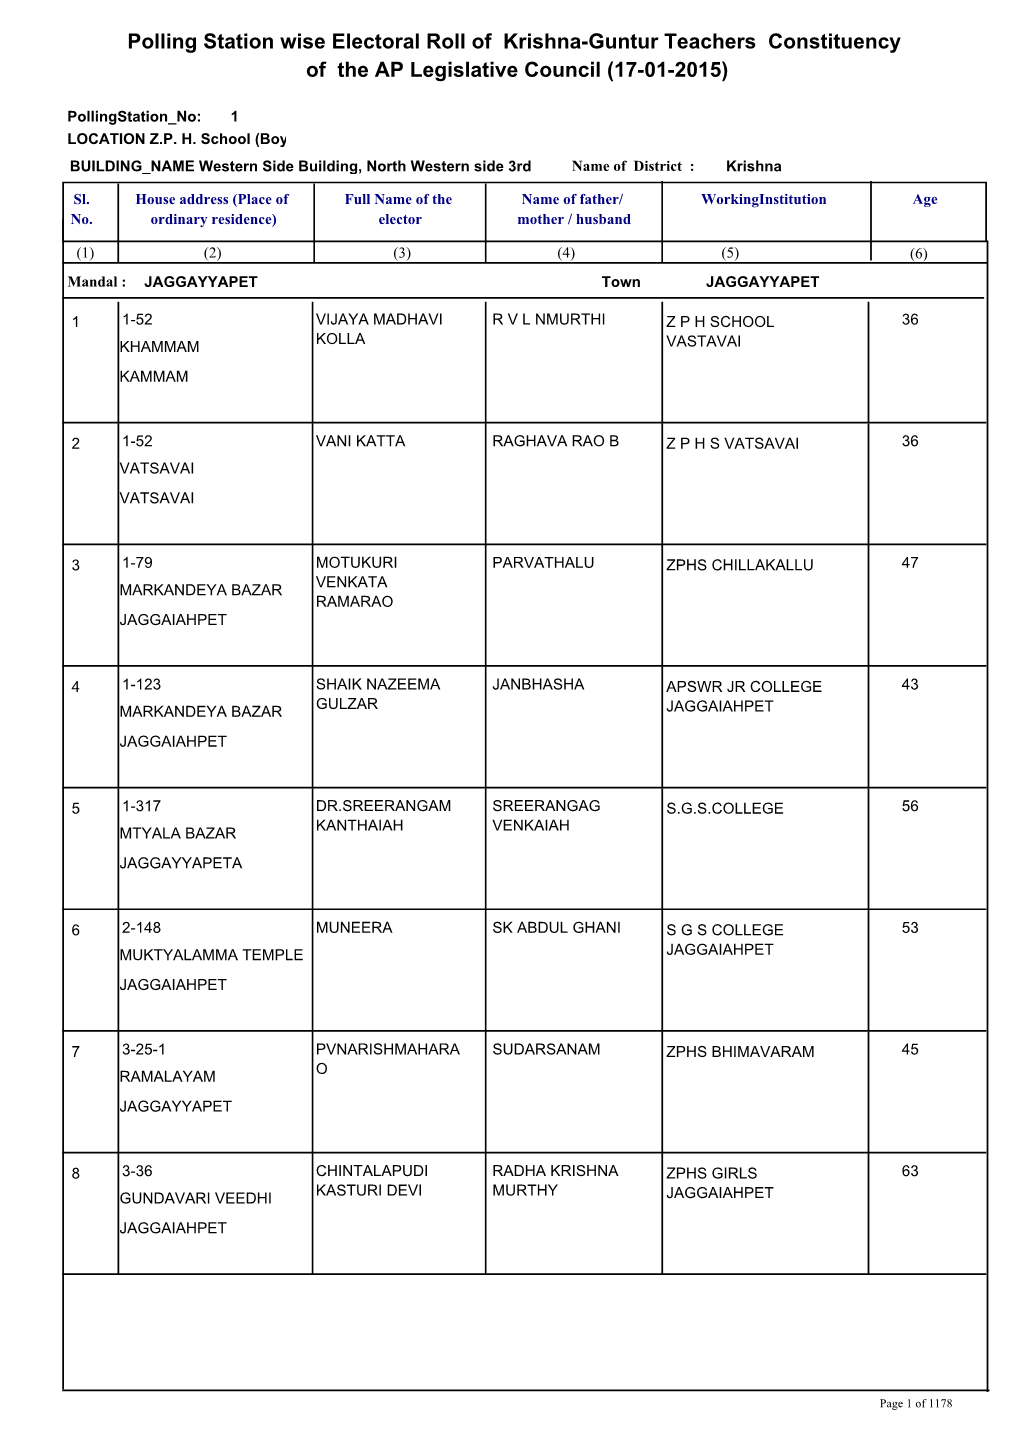 Polling Station Wise Electoral Roll of Krishna-Guntur Teachers Constituency of the AP Legislative Council (17-01-2015)